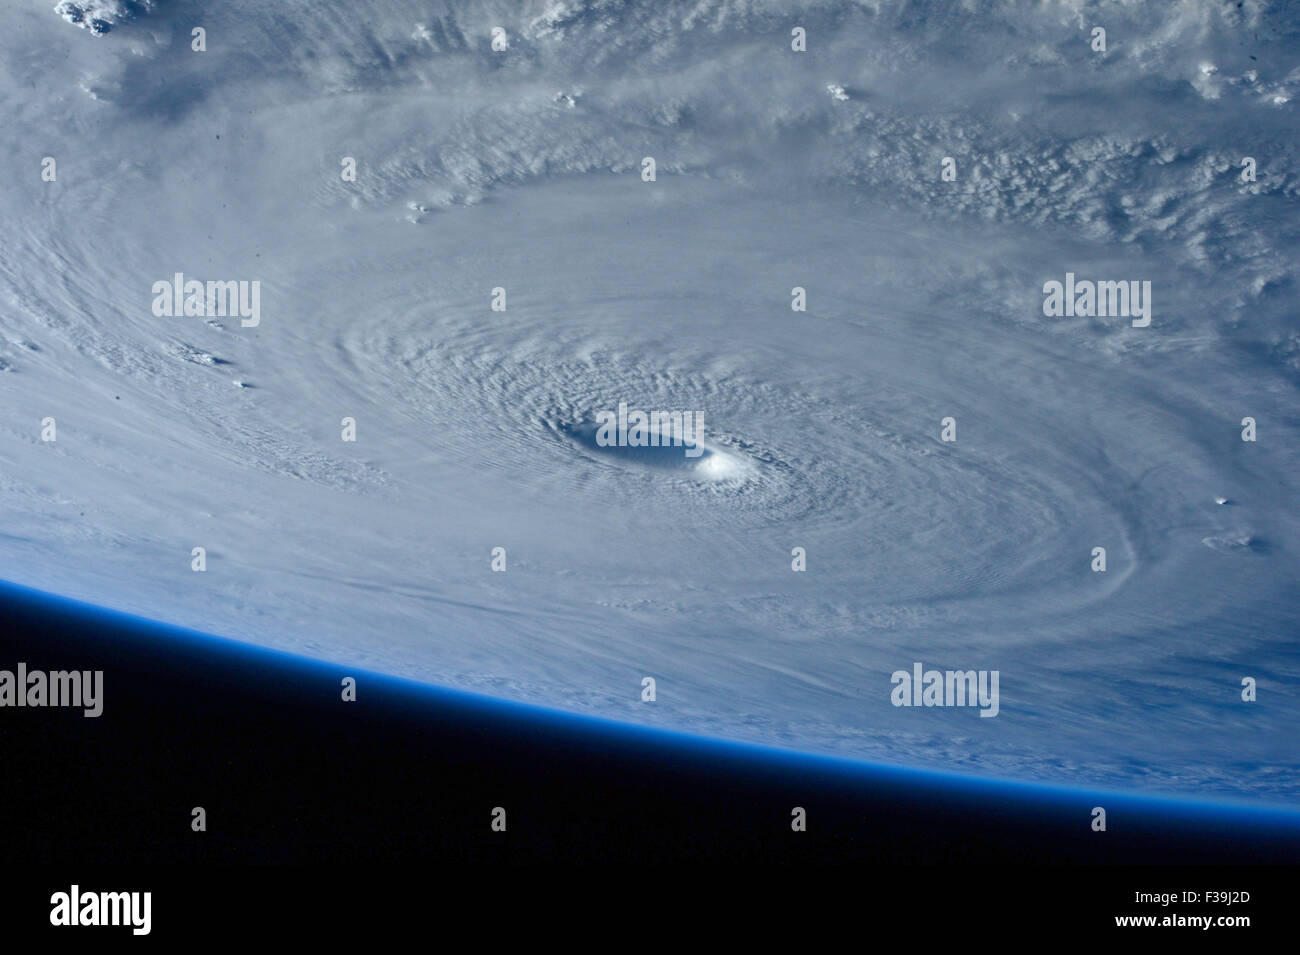 Typhoon Maysak rafforzato in un super tifone su Marzo 31, raggiungendo la categoria 5 uragano lo stato sul vento Saffir-Simpson Scala. Foto Stock